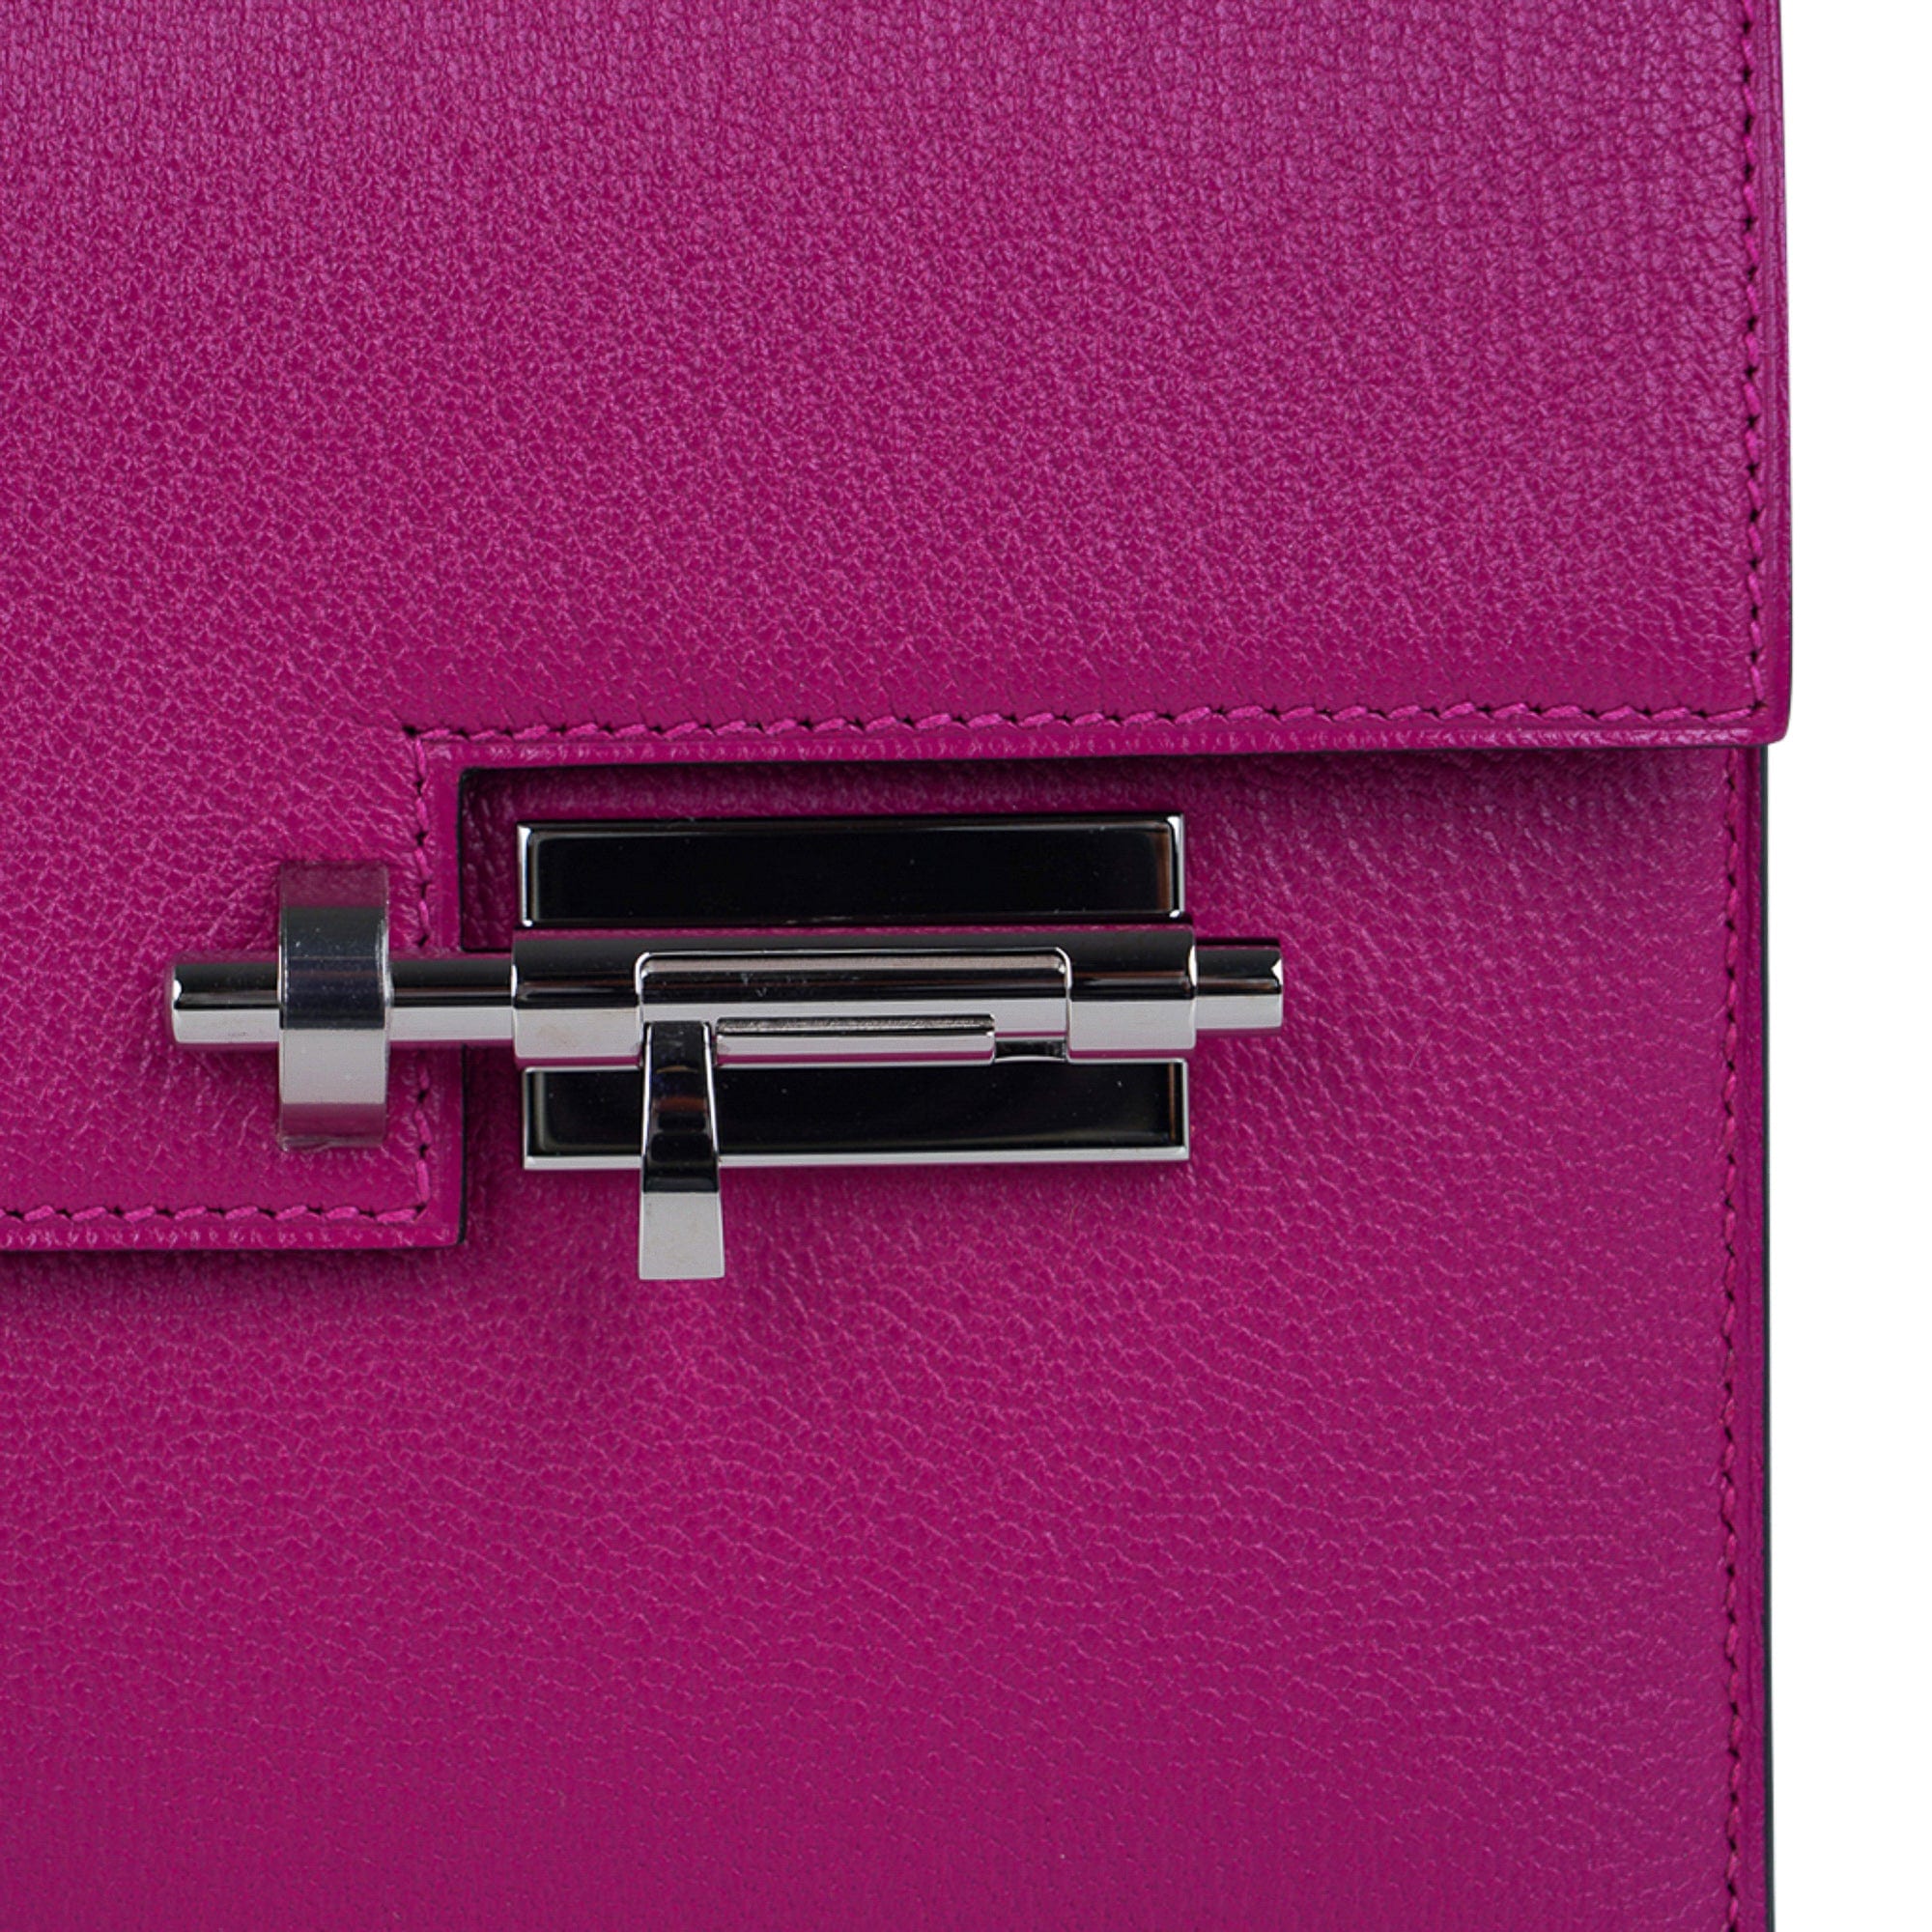 Gorgeous Hermes Saphir Verrou handbag 2017 New